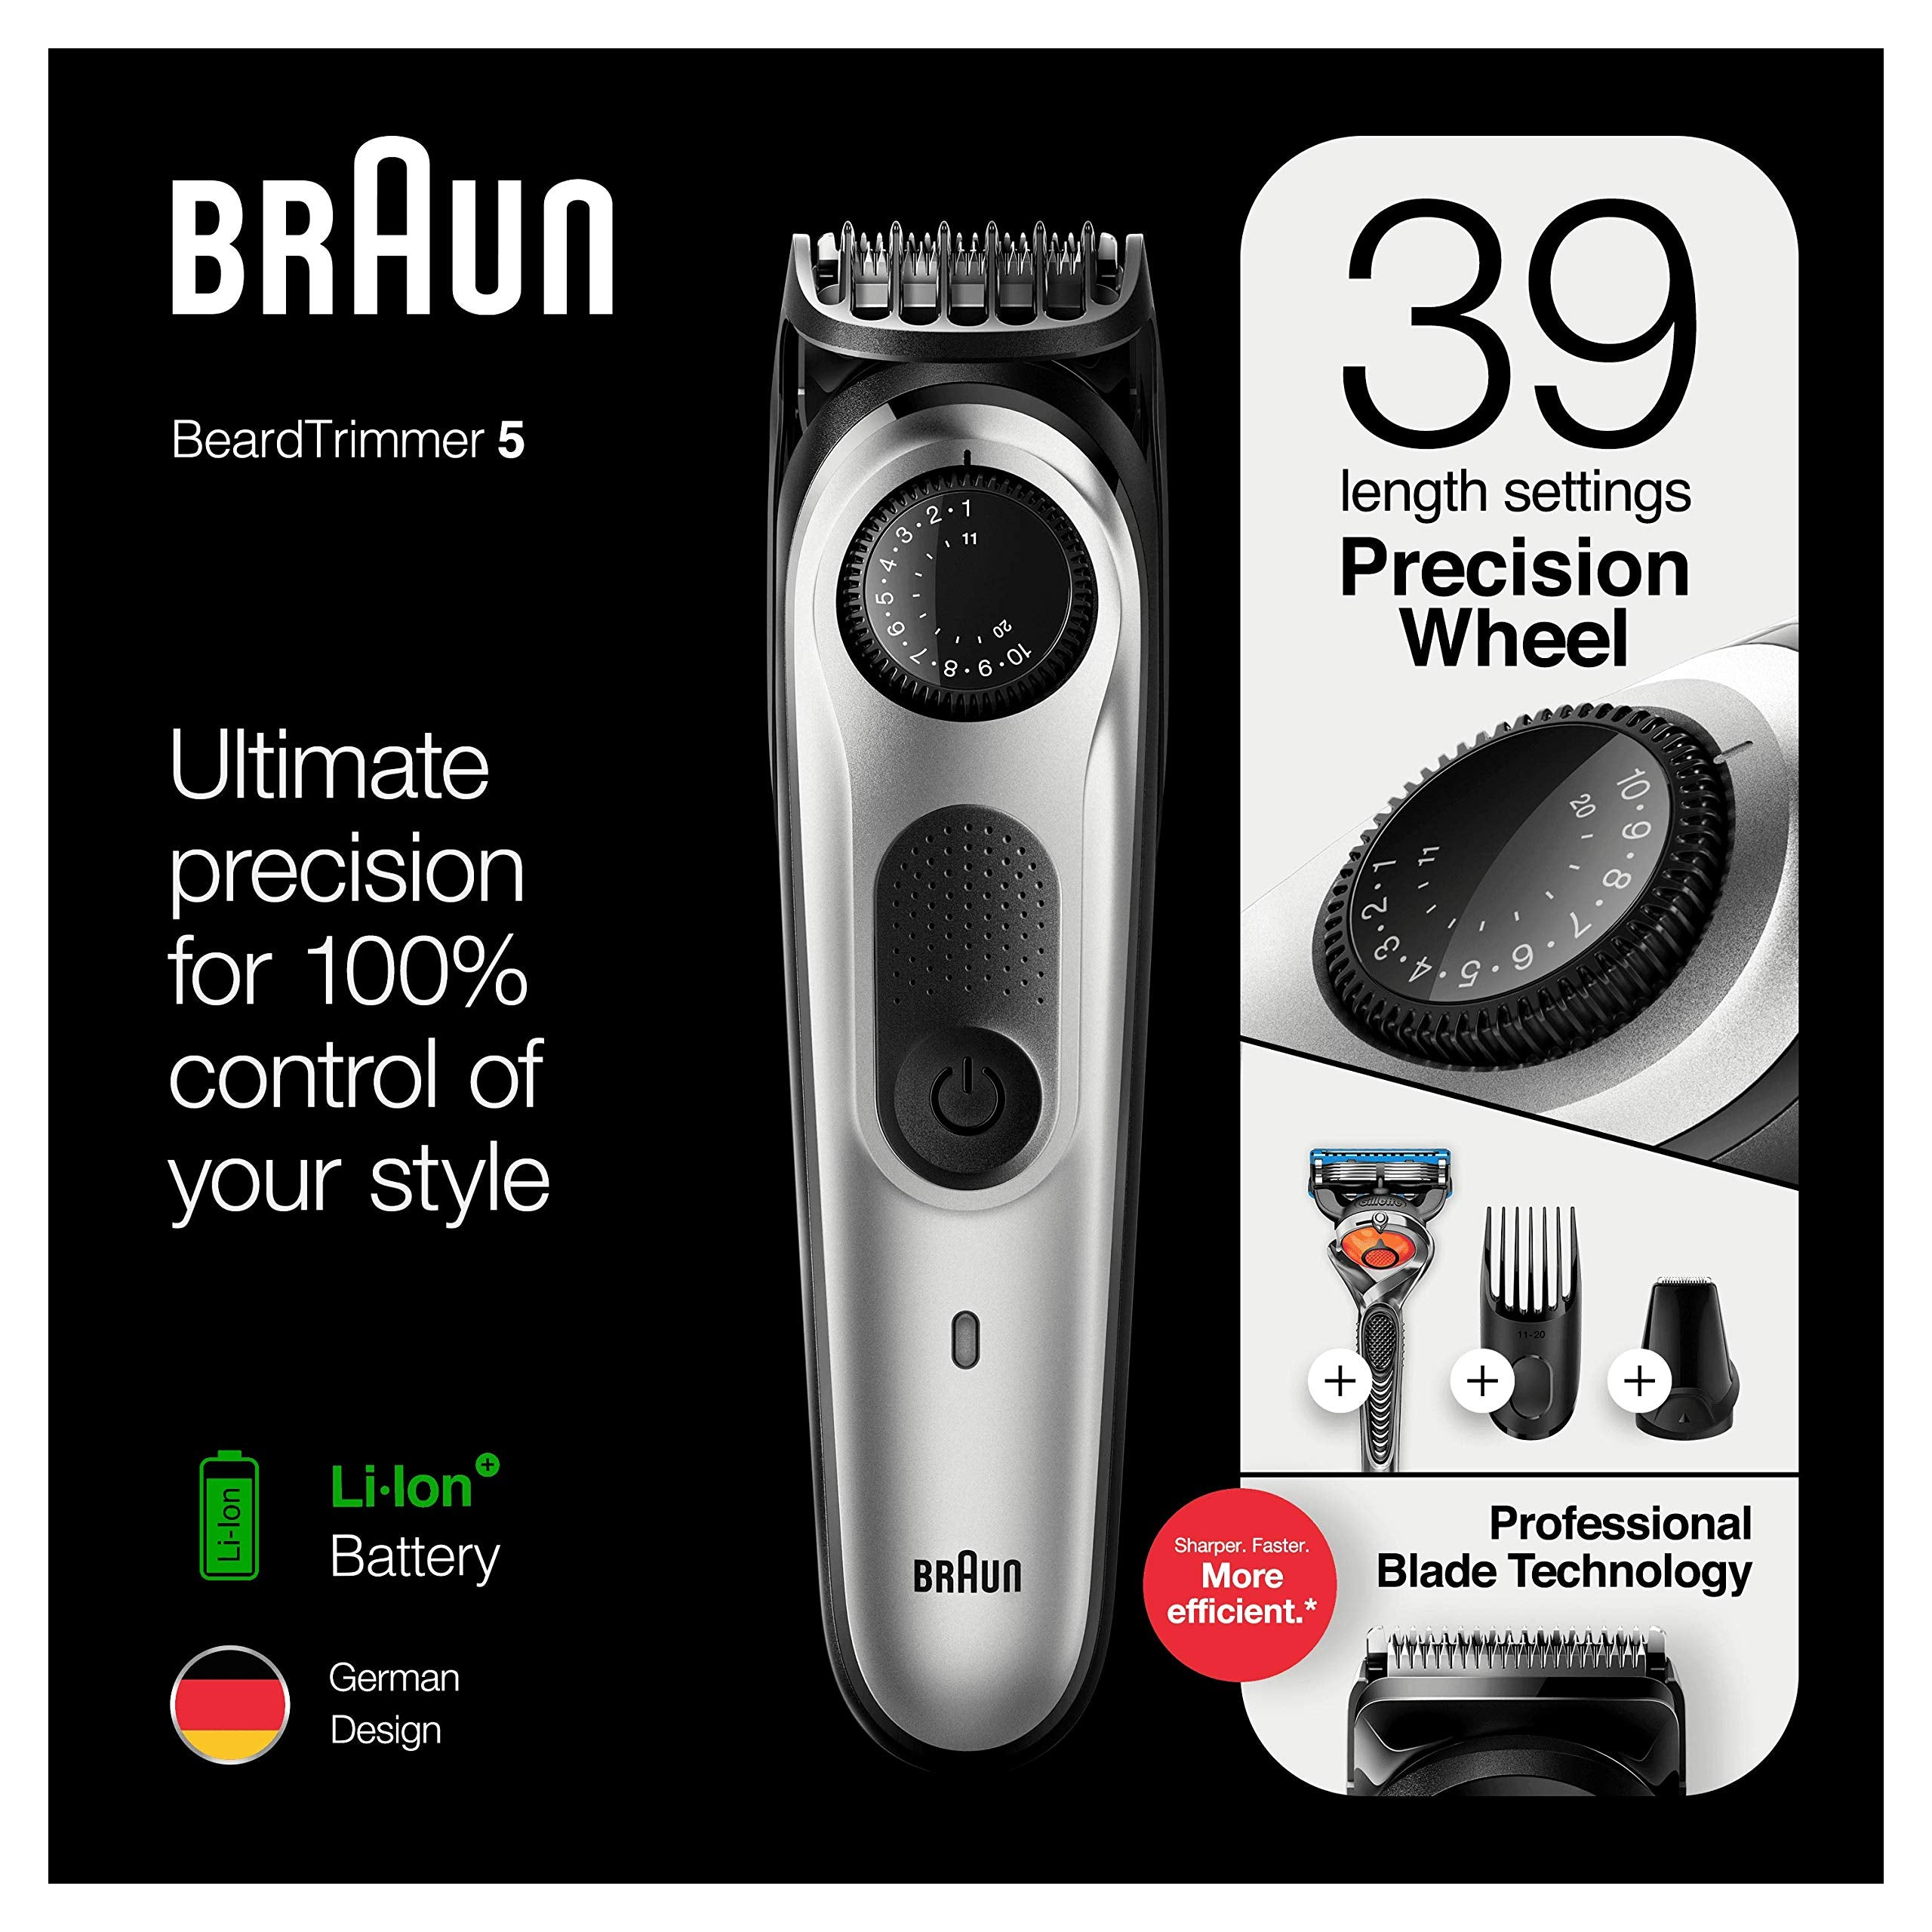 Braun Beard Trimmer BT5260 and Hair Clipper for Men, Lifetime Sharp Blades, 39 Length Settings, Black/Silver Metal, UK Two Pin Plug